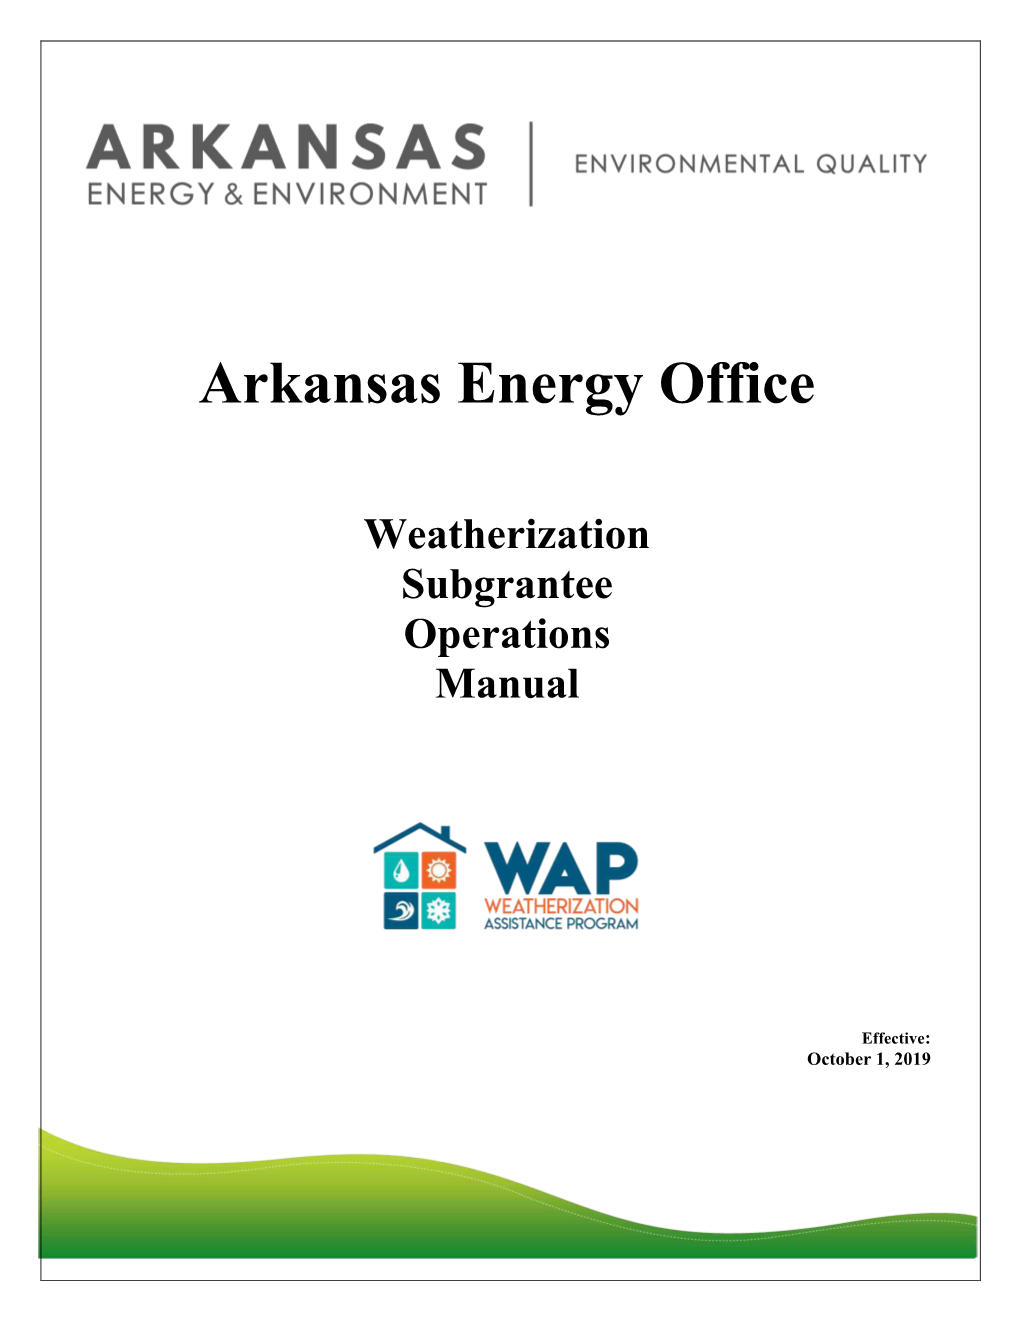 Arkansas Energy Office Weatherization Subgrantee Operations Manual